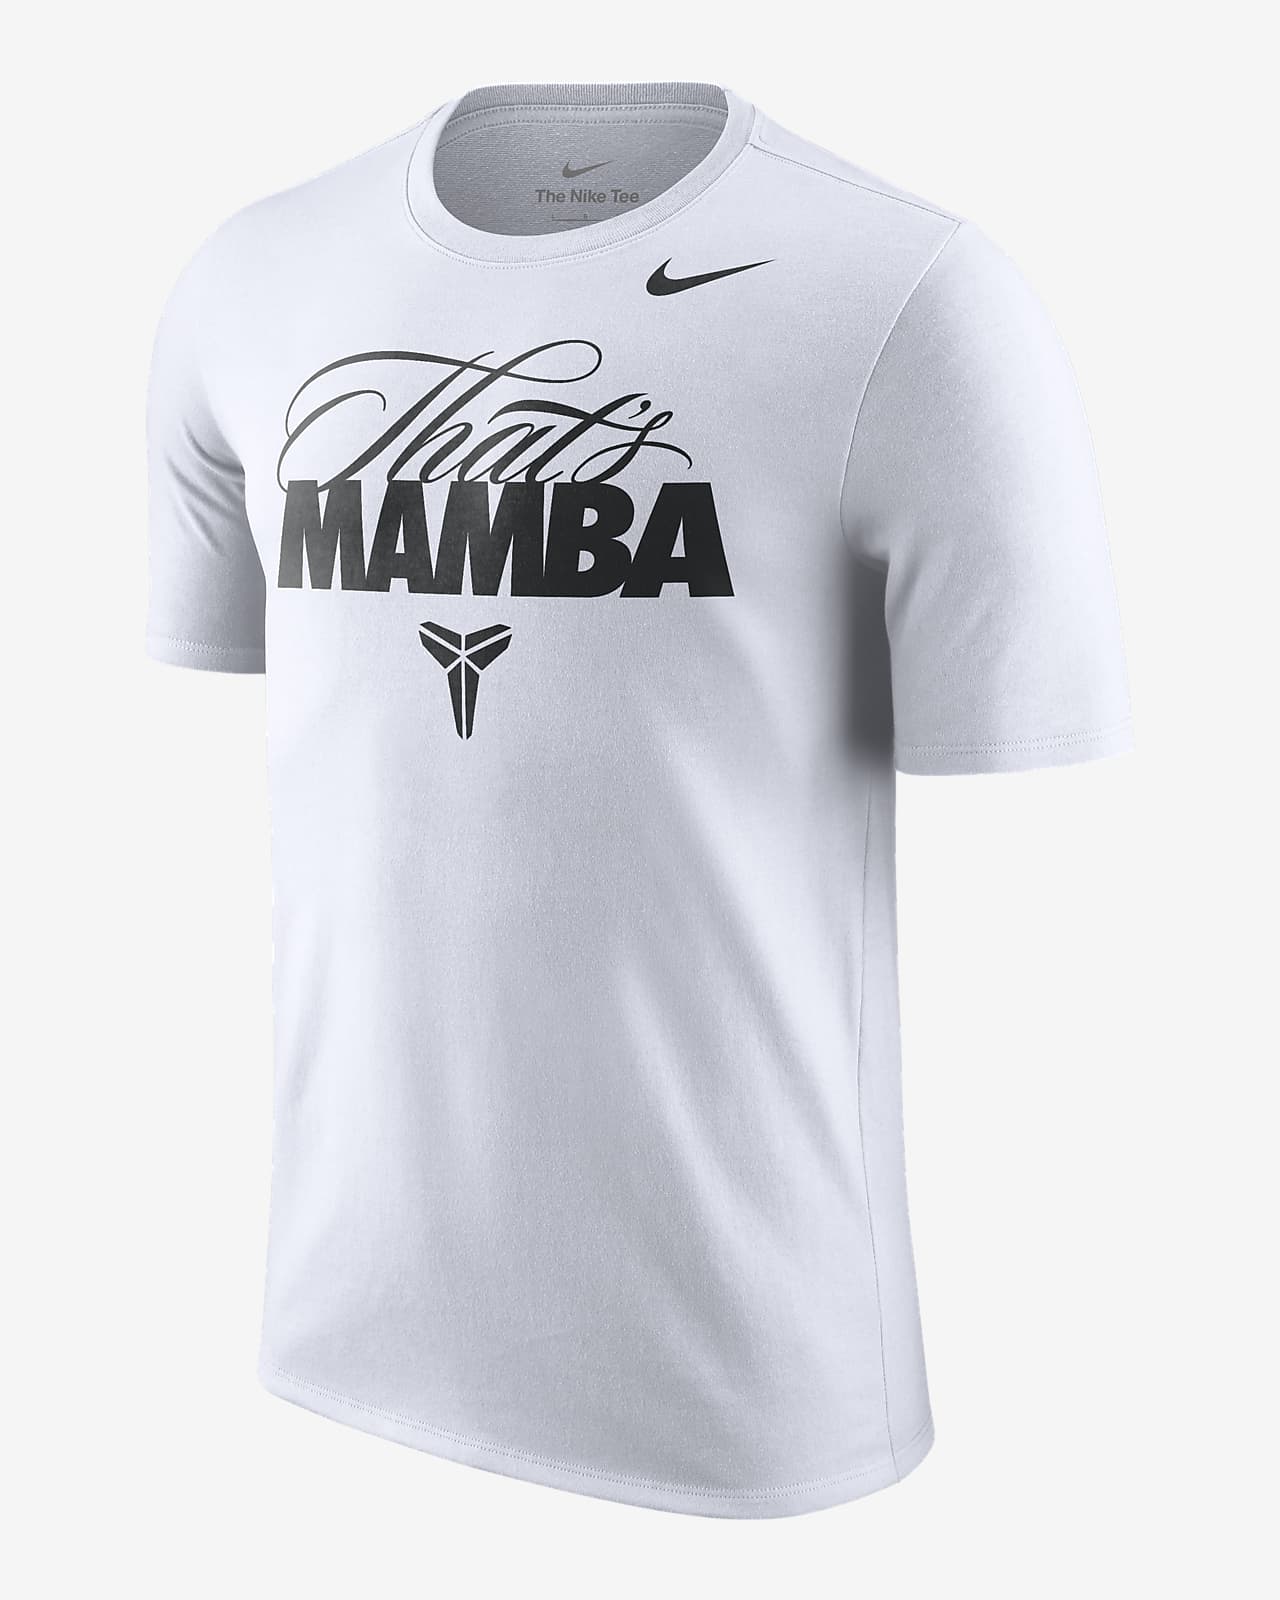 Kobe Men's T-Shirt.